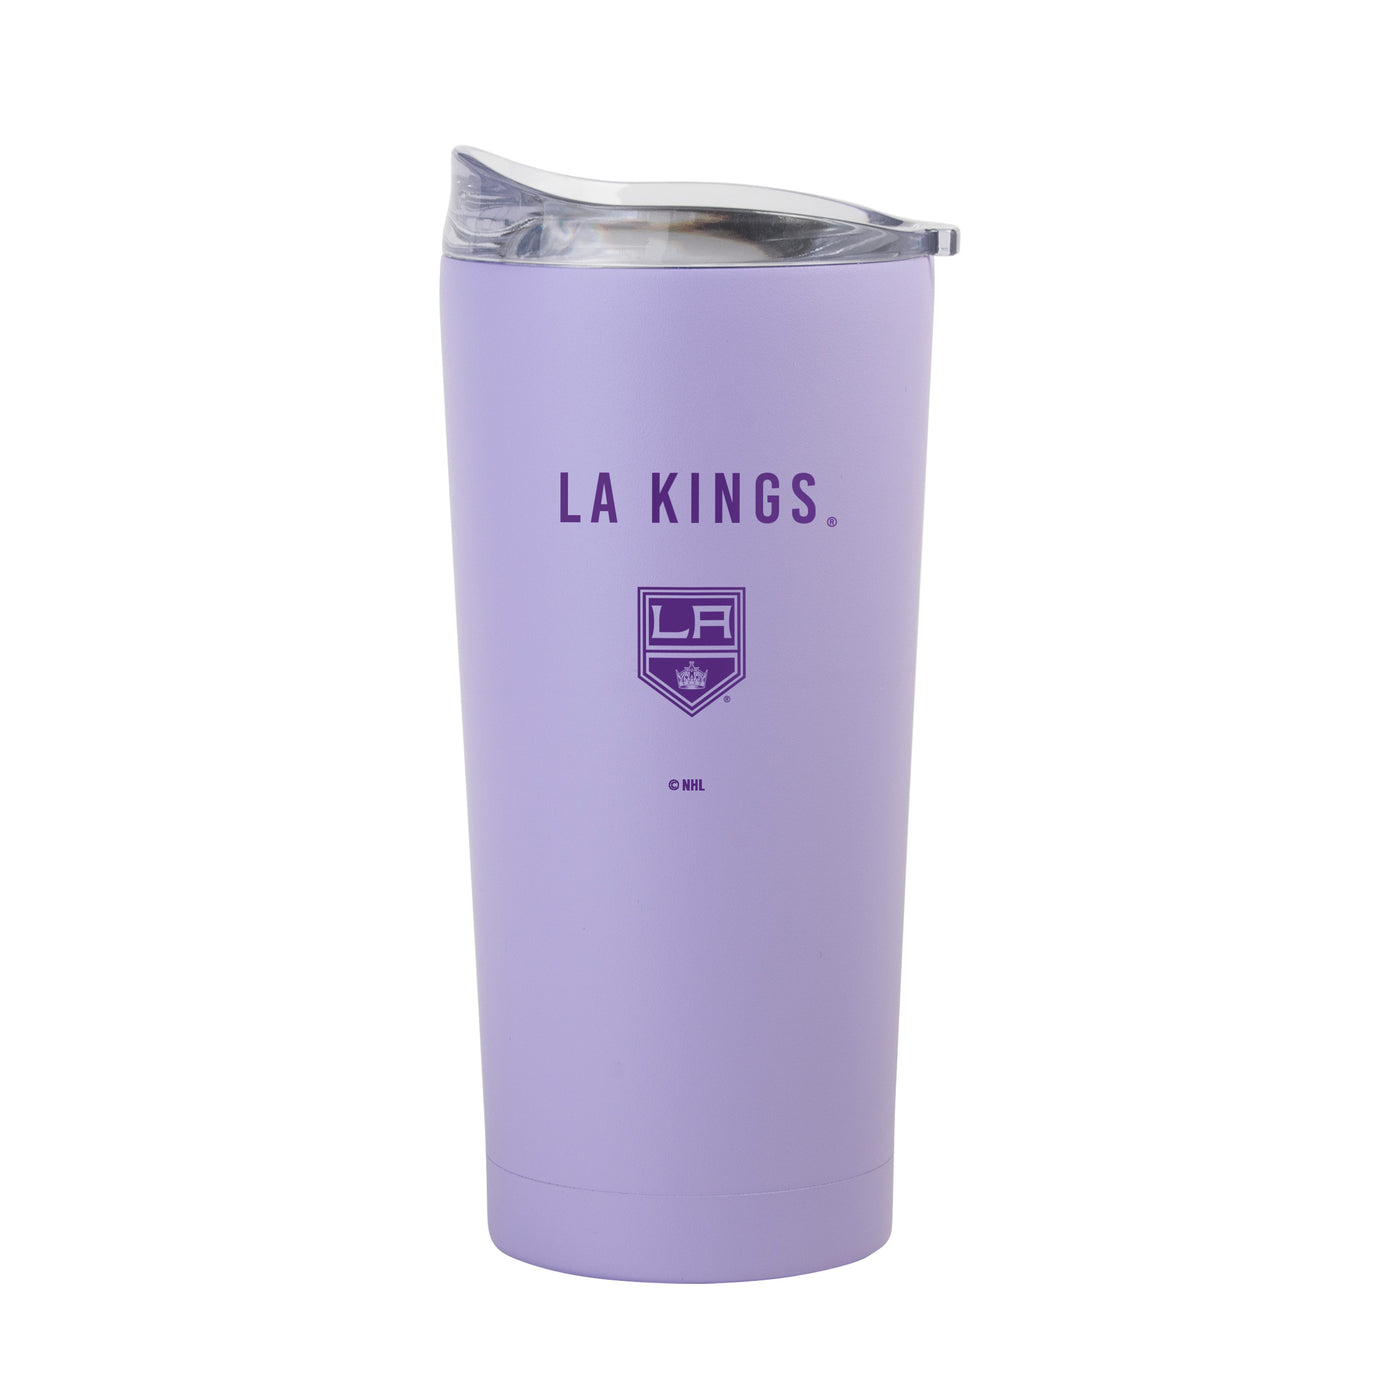 LA Kings 20oz Tonal Lavender Powder Coat Tumbler